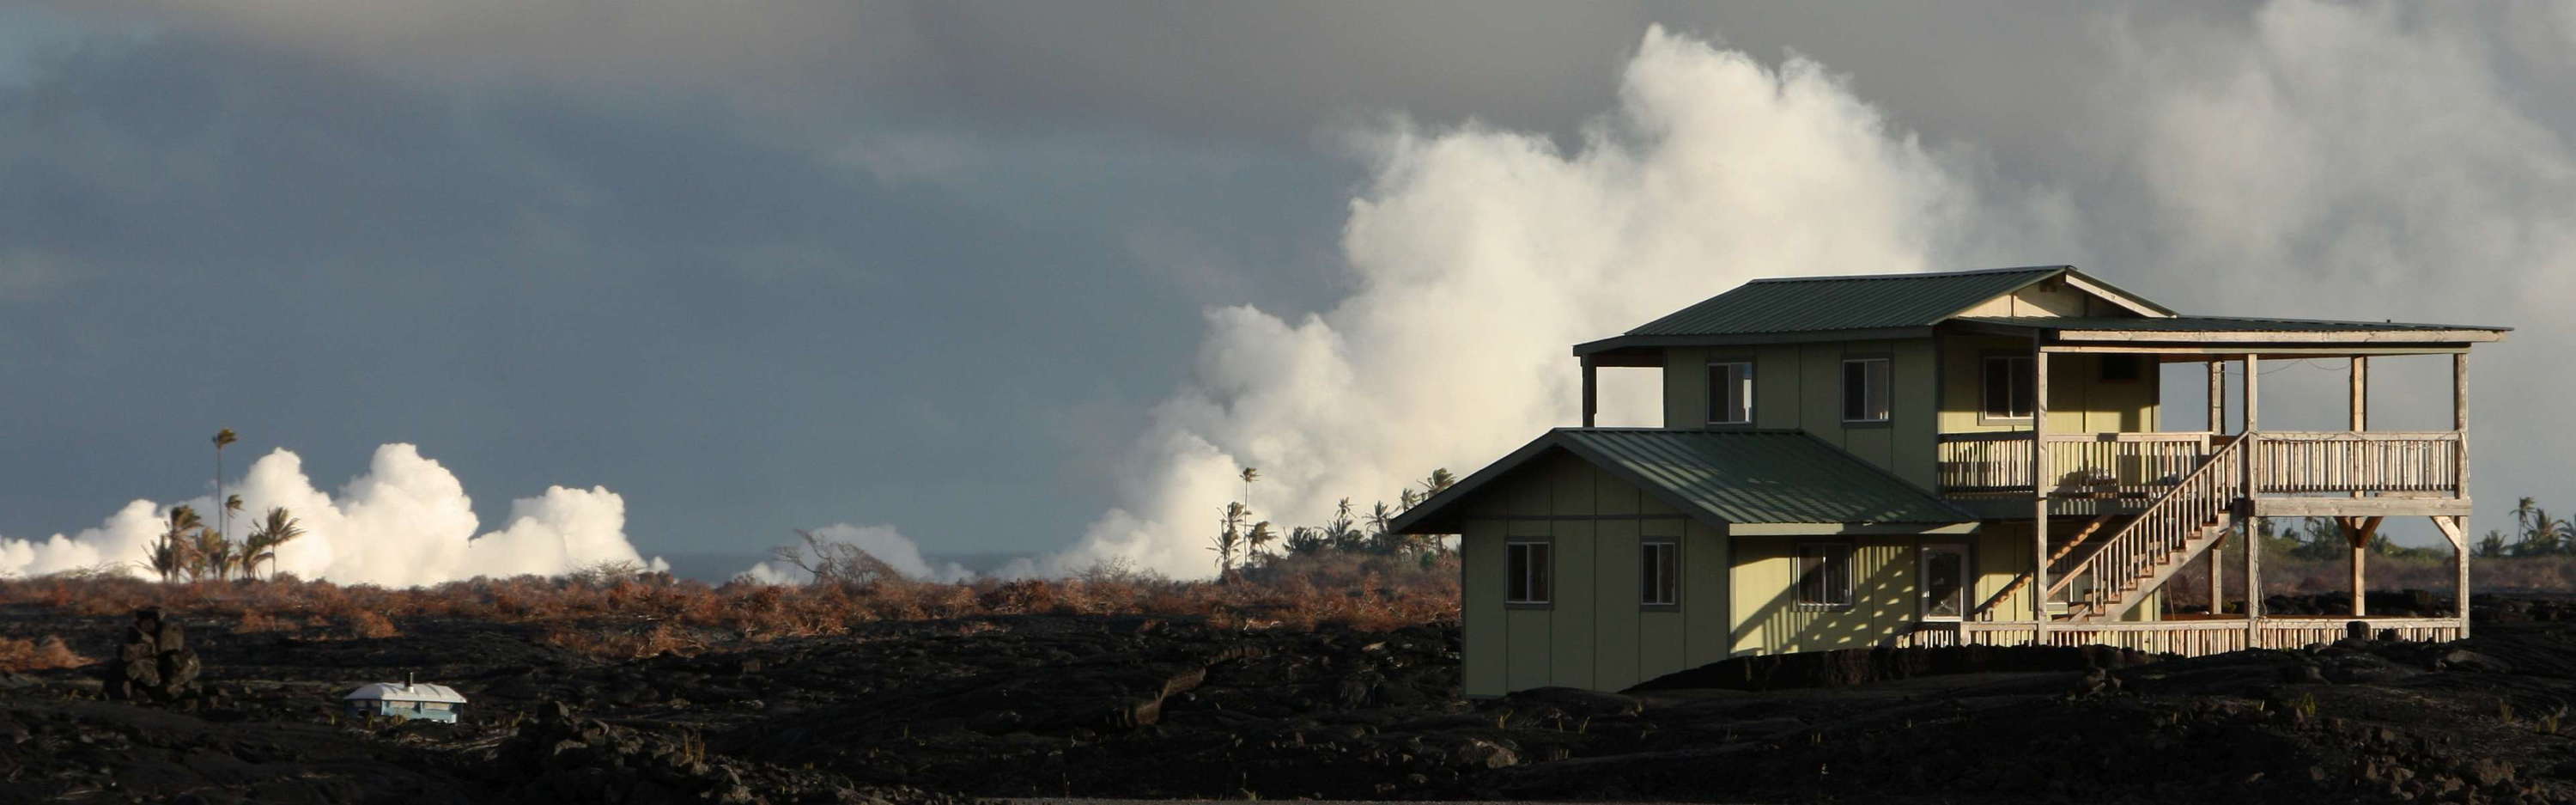 Kalapana  |  Homes on lava and steam plume